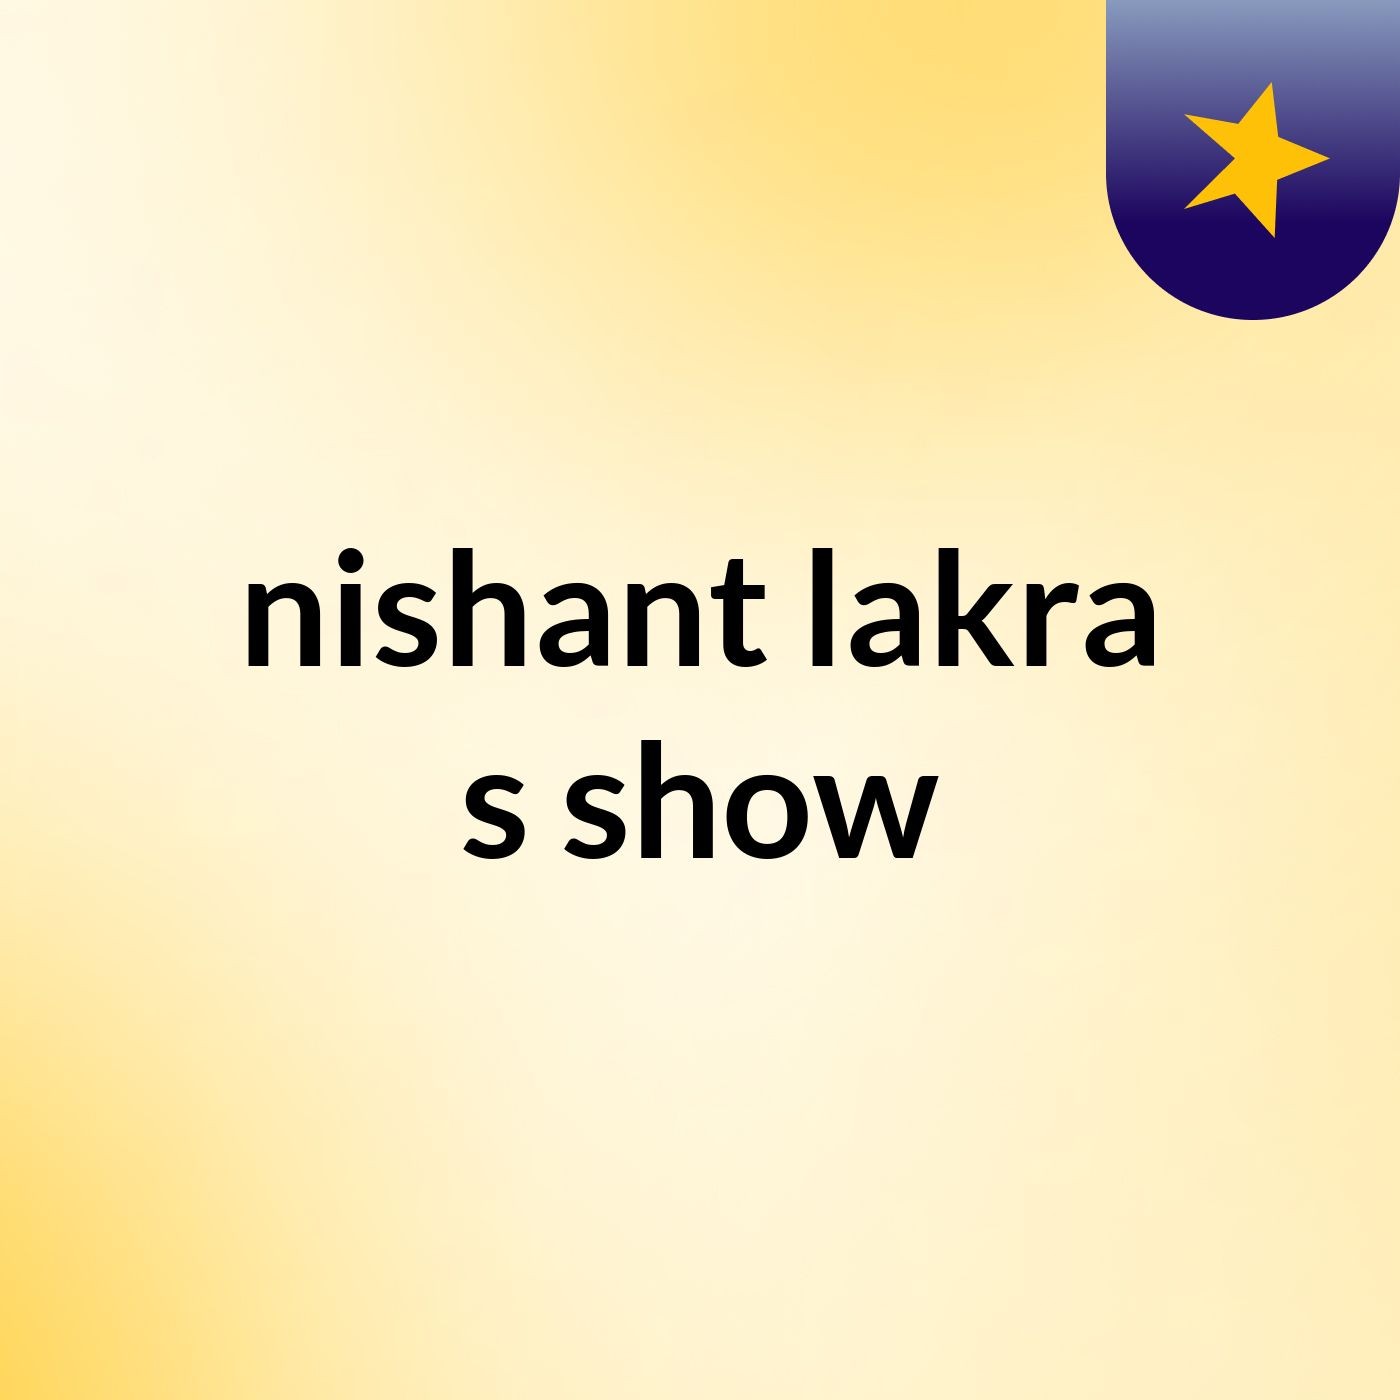 nishant lakra's show